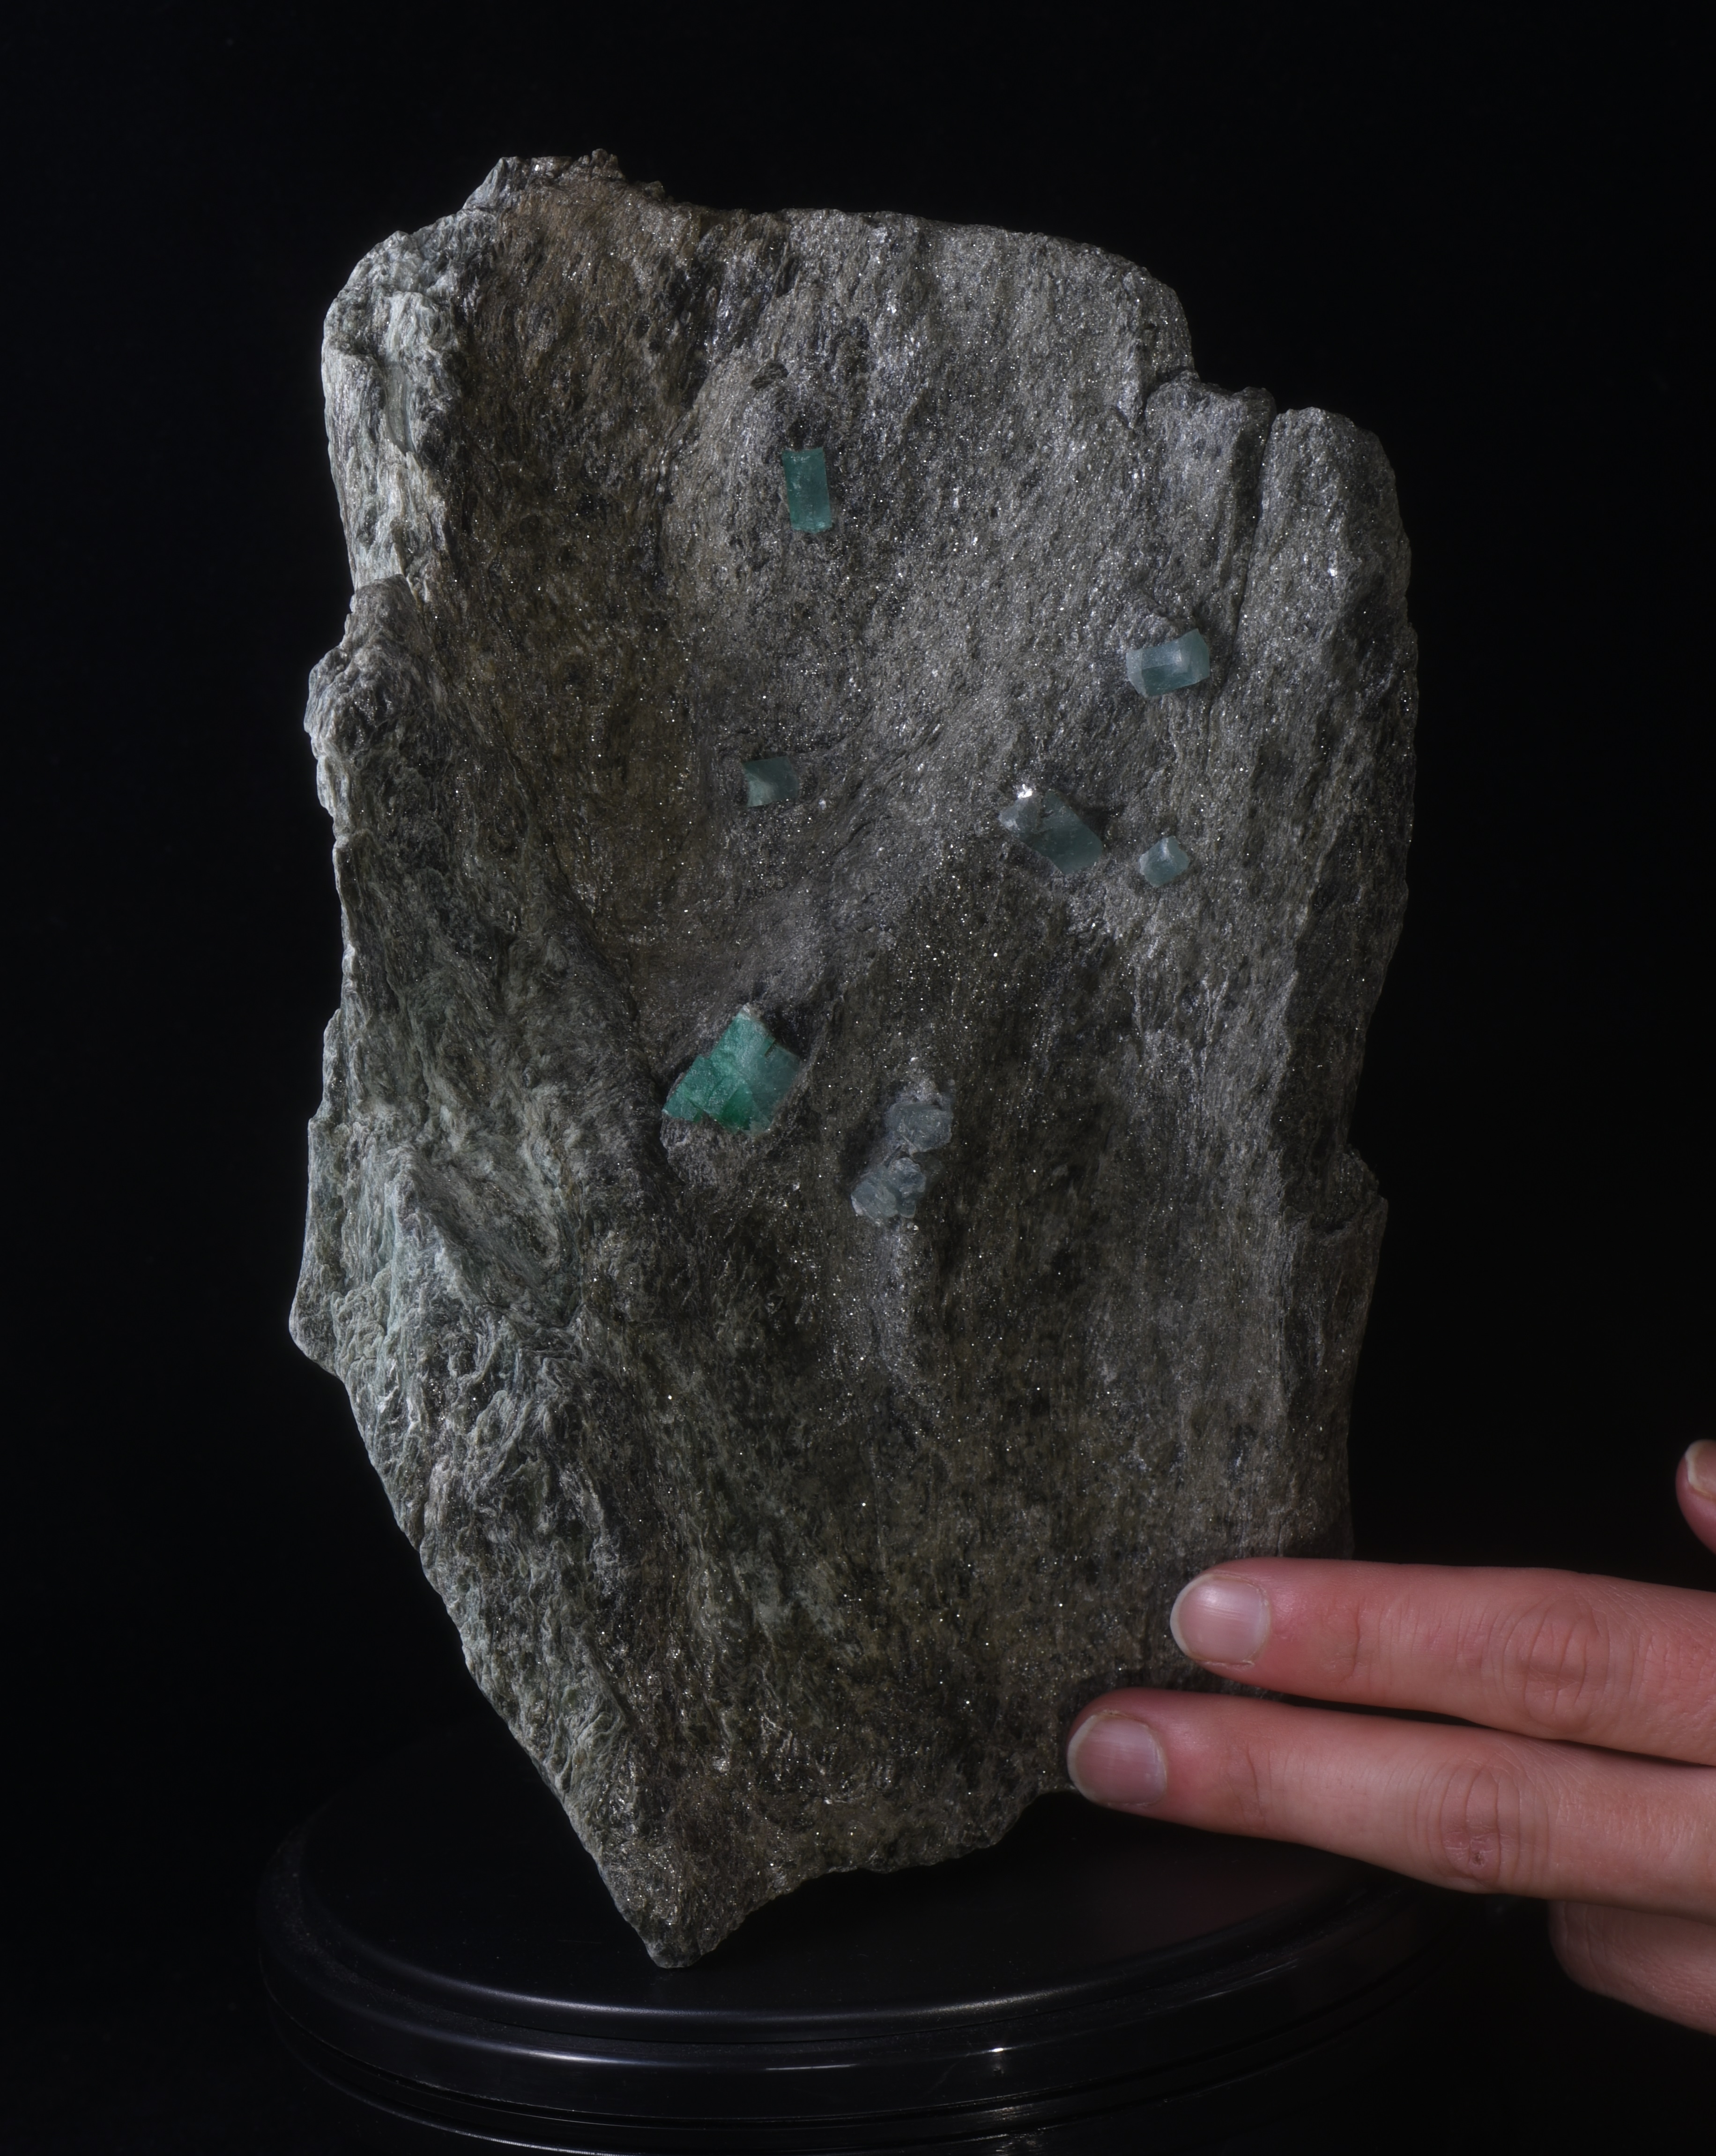 Emerald and Aquamarine on one specimen